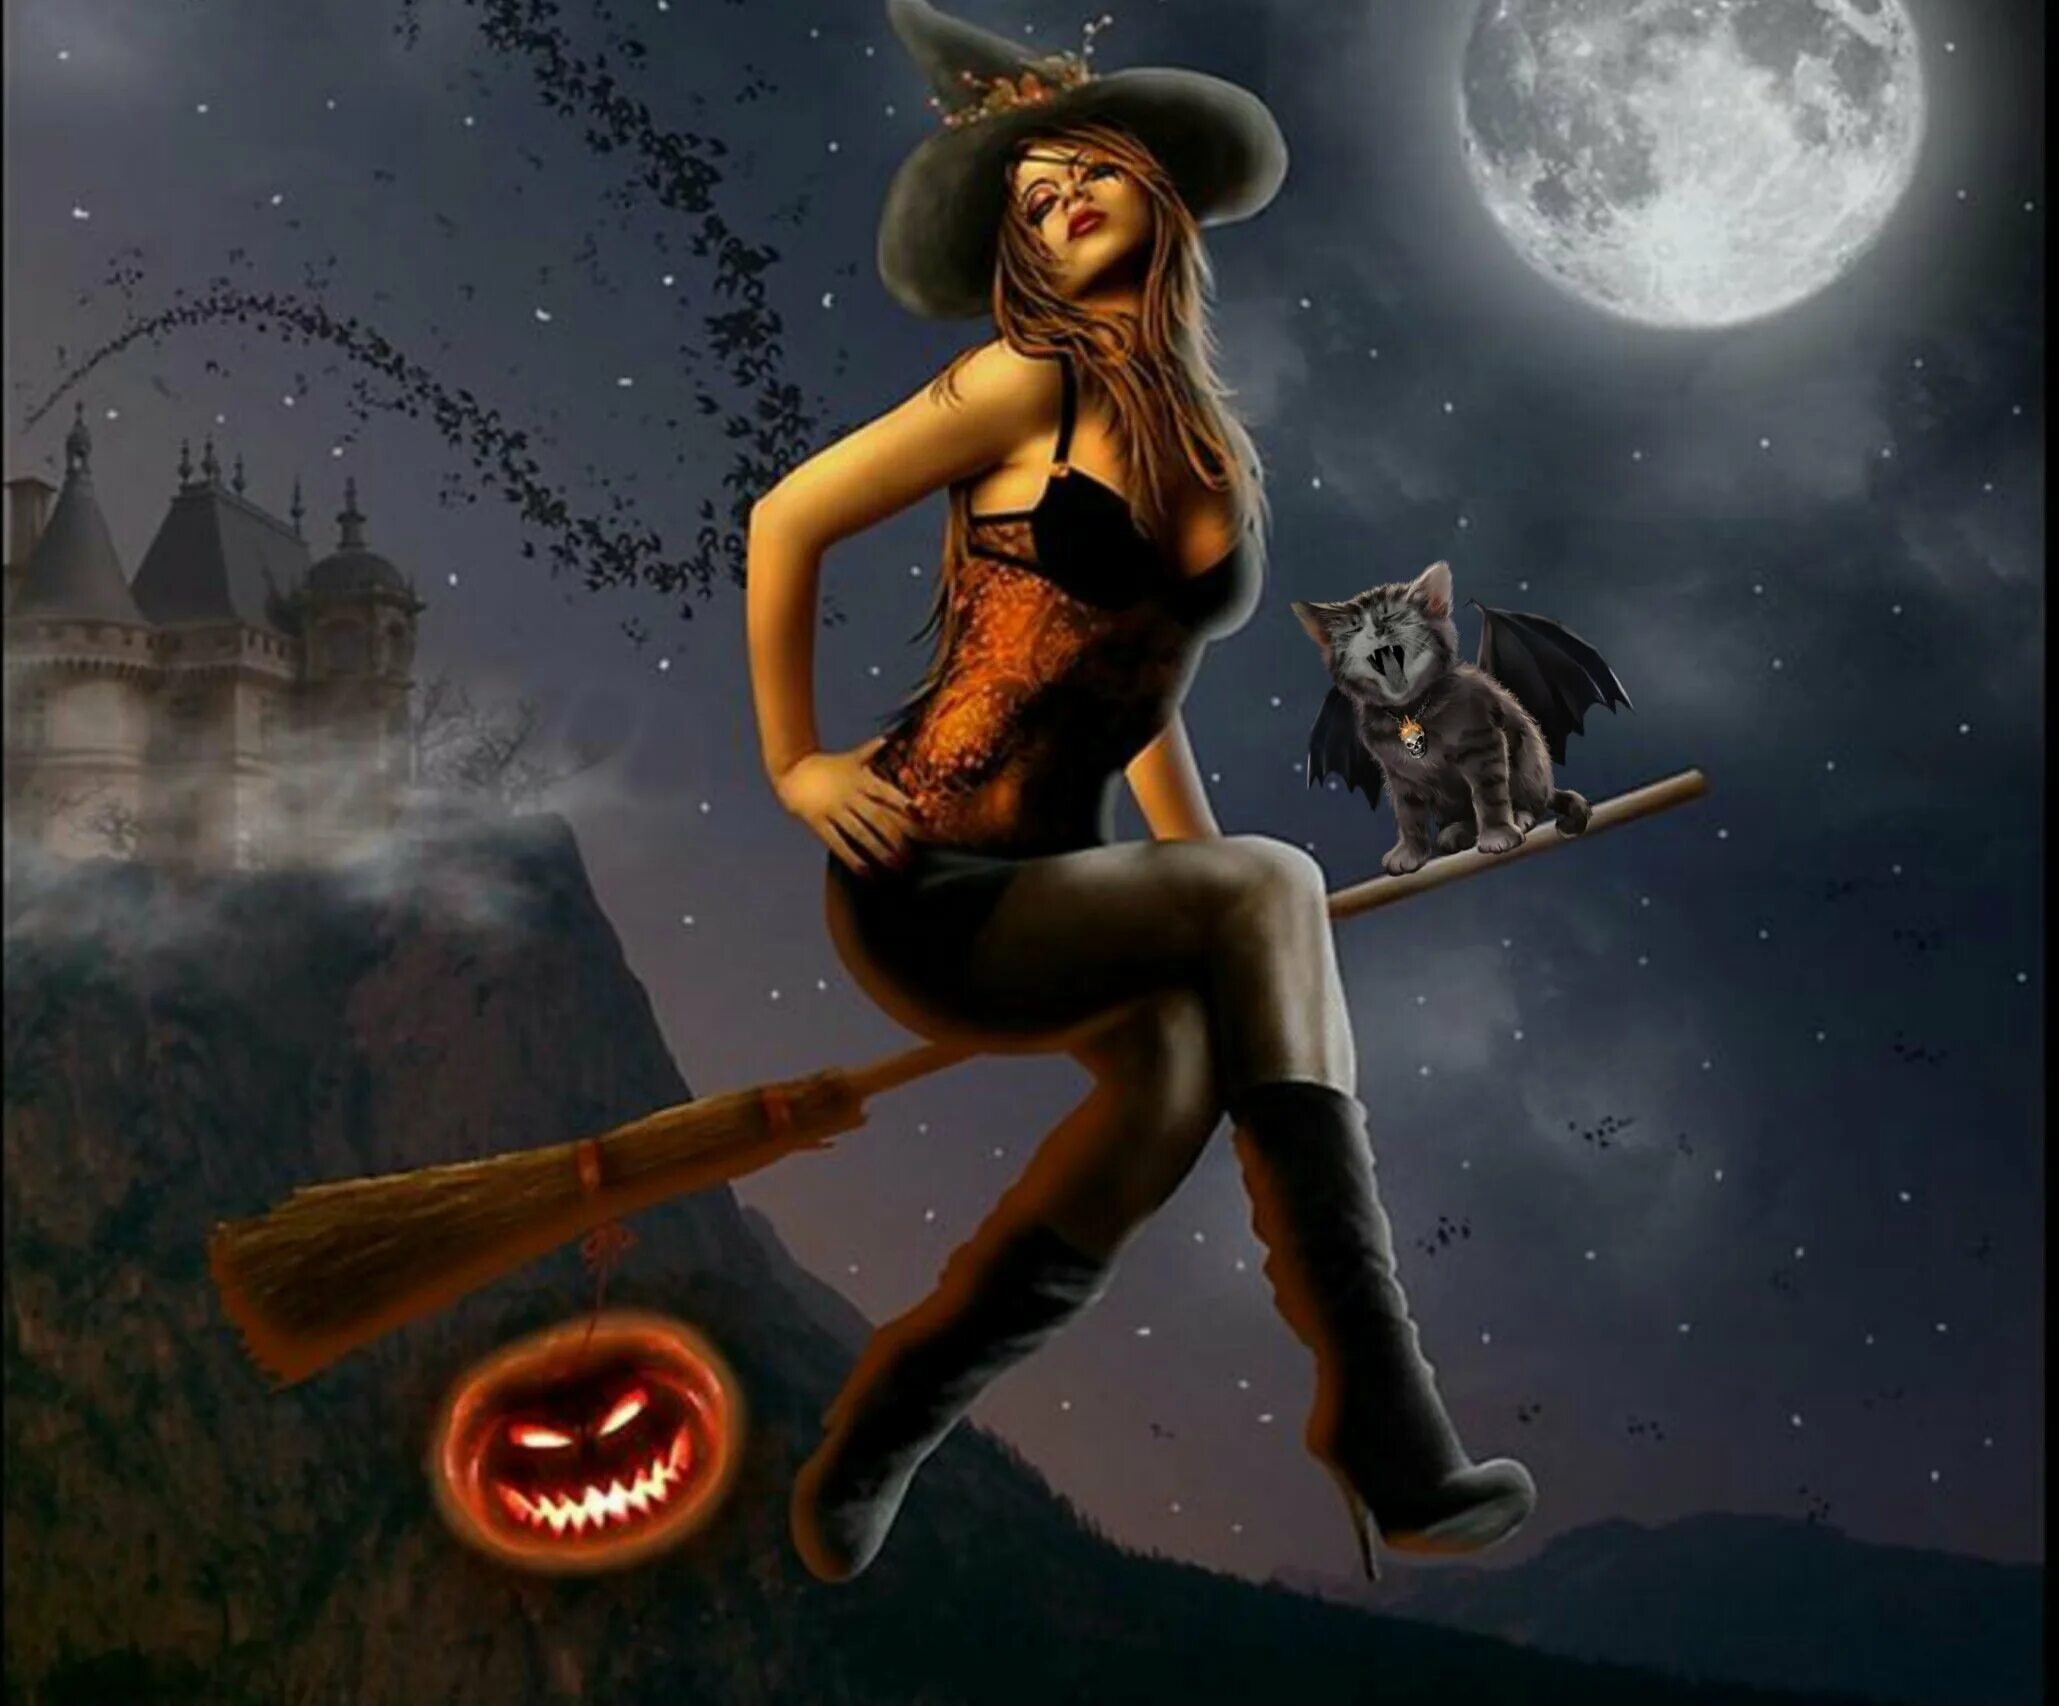 Хэллоуин ведьмочка на метле. Баба яга лесбиянка